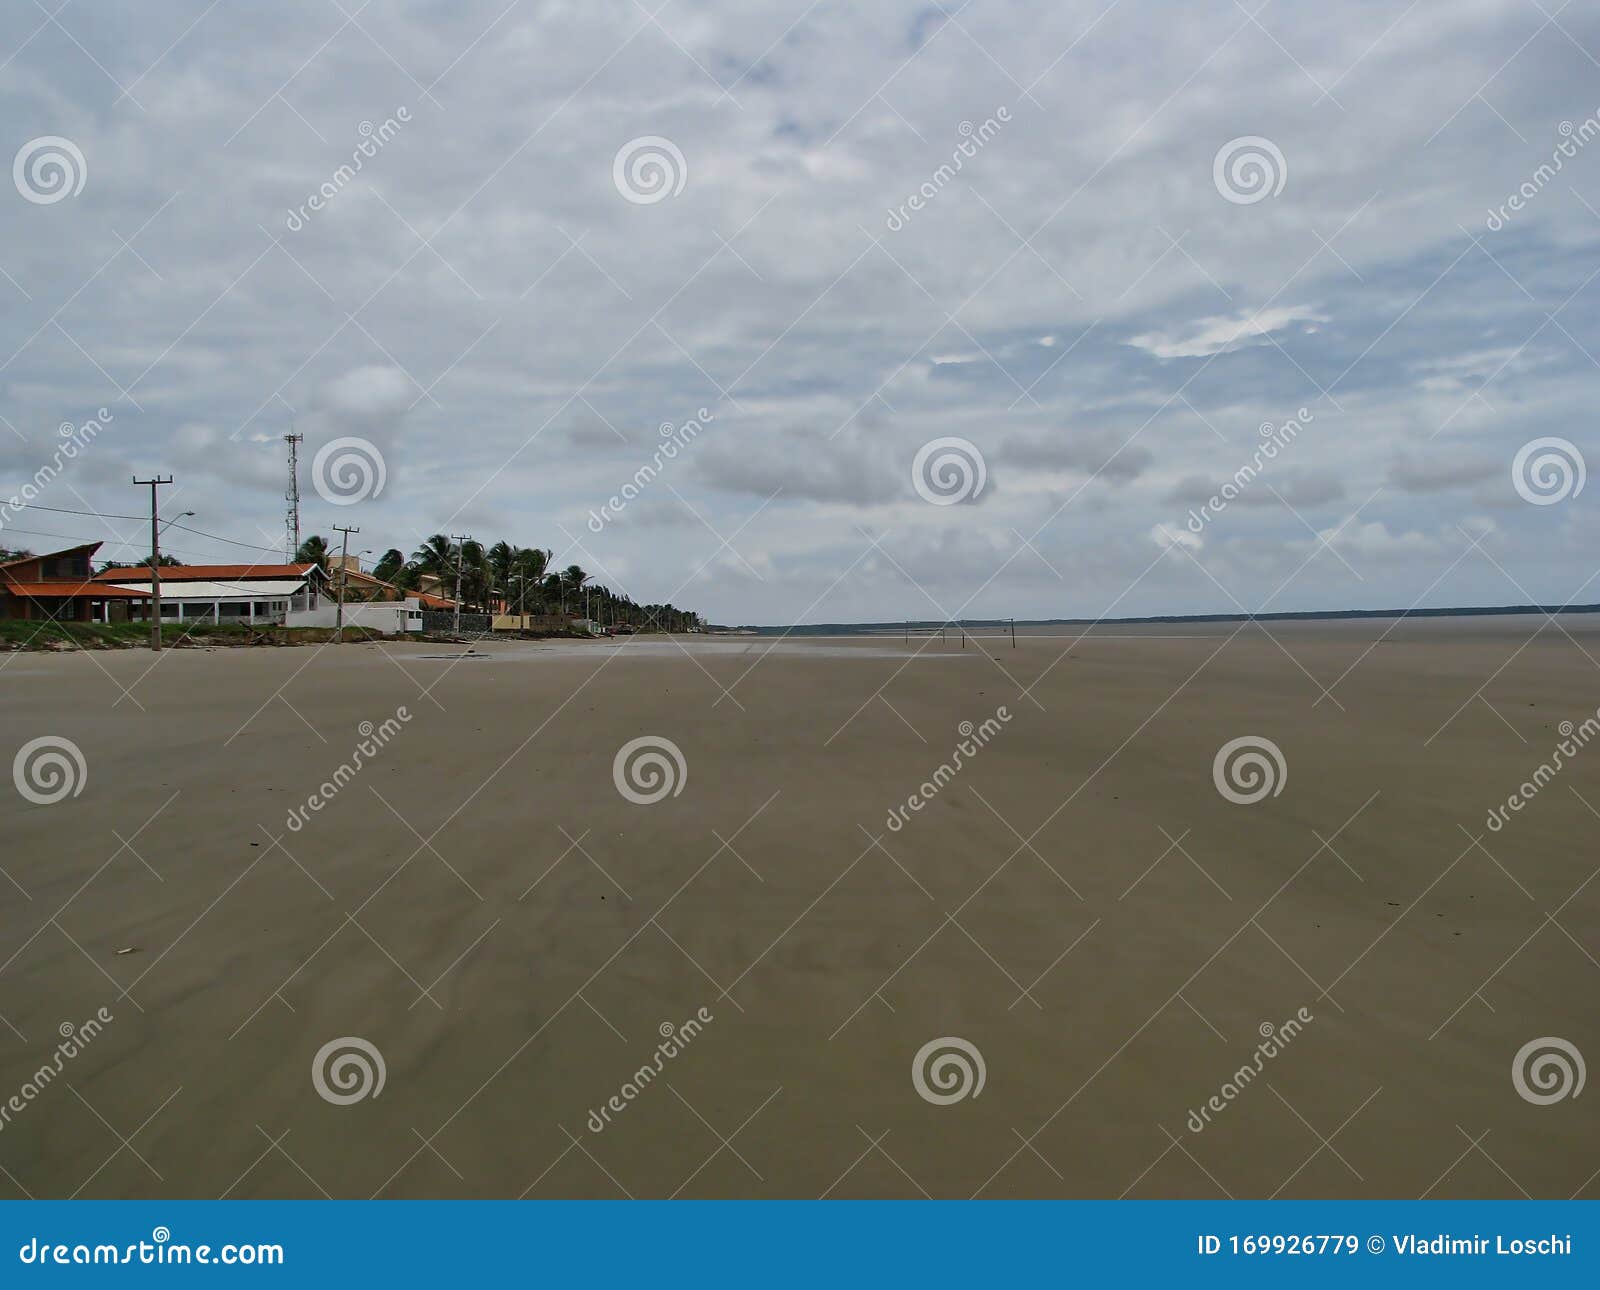 panaquatira beach - walk in the paciencia patience river delta